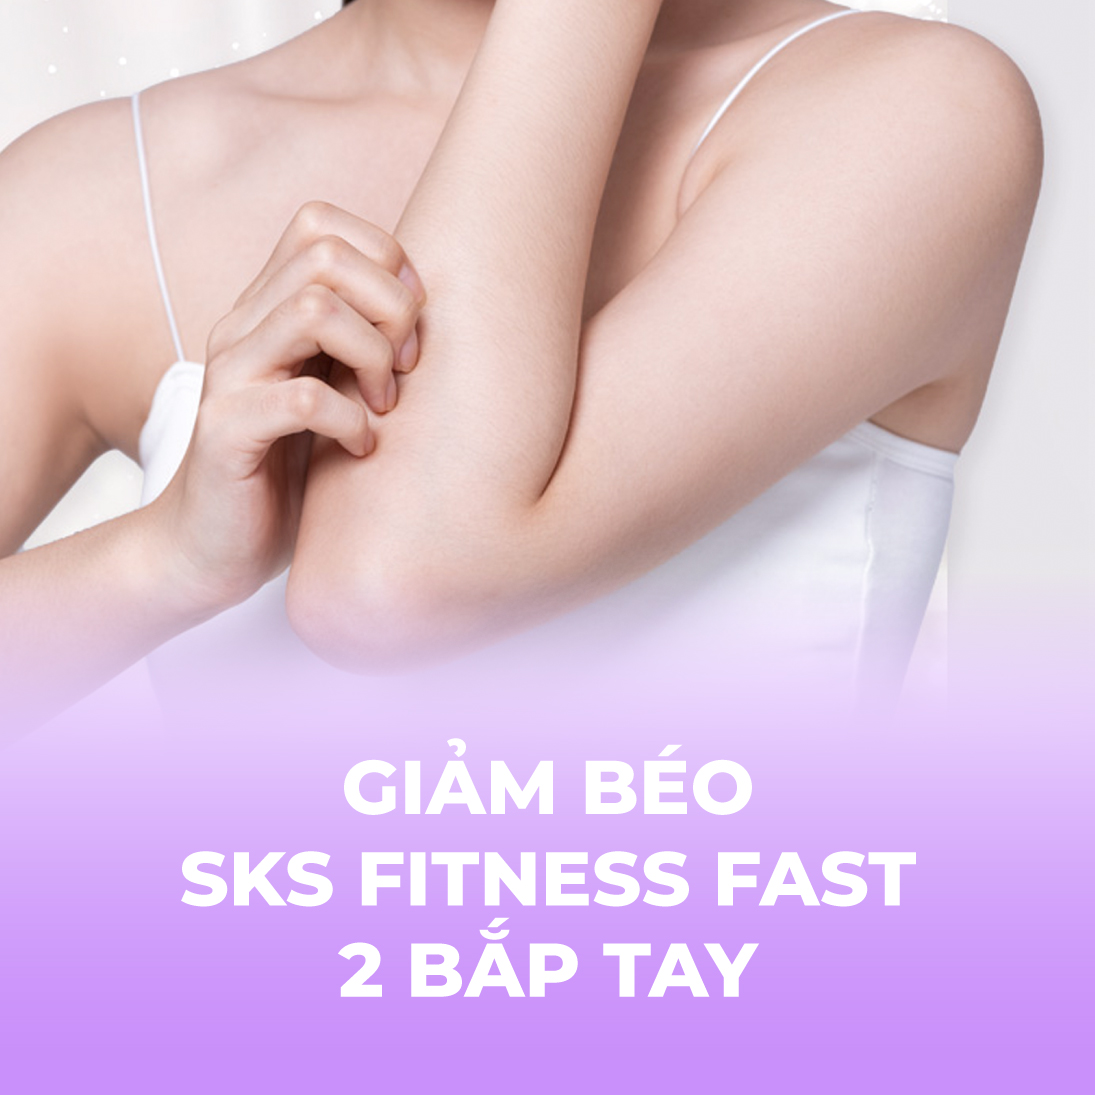 Giảm béo - SKS Fitness Fast - 2 bắp tay - 1 buổi